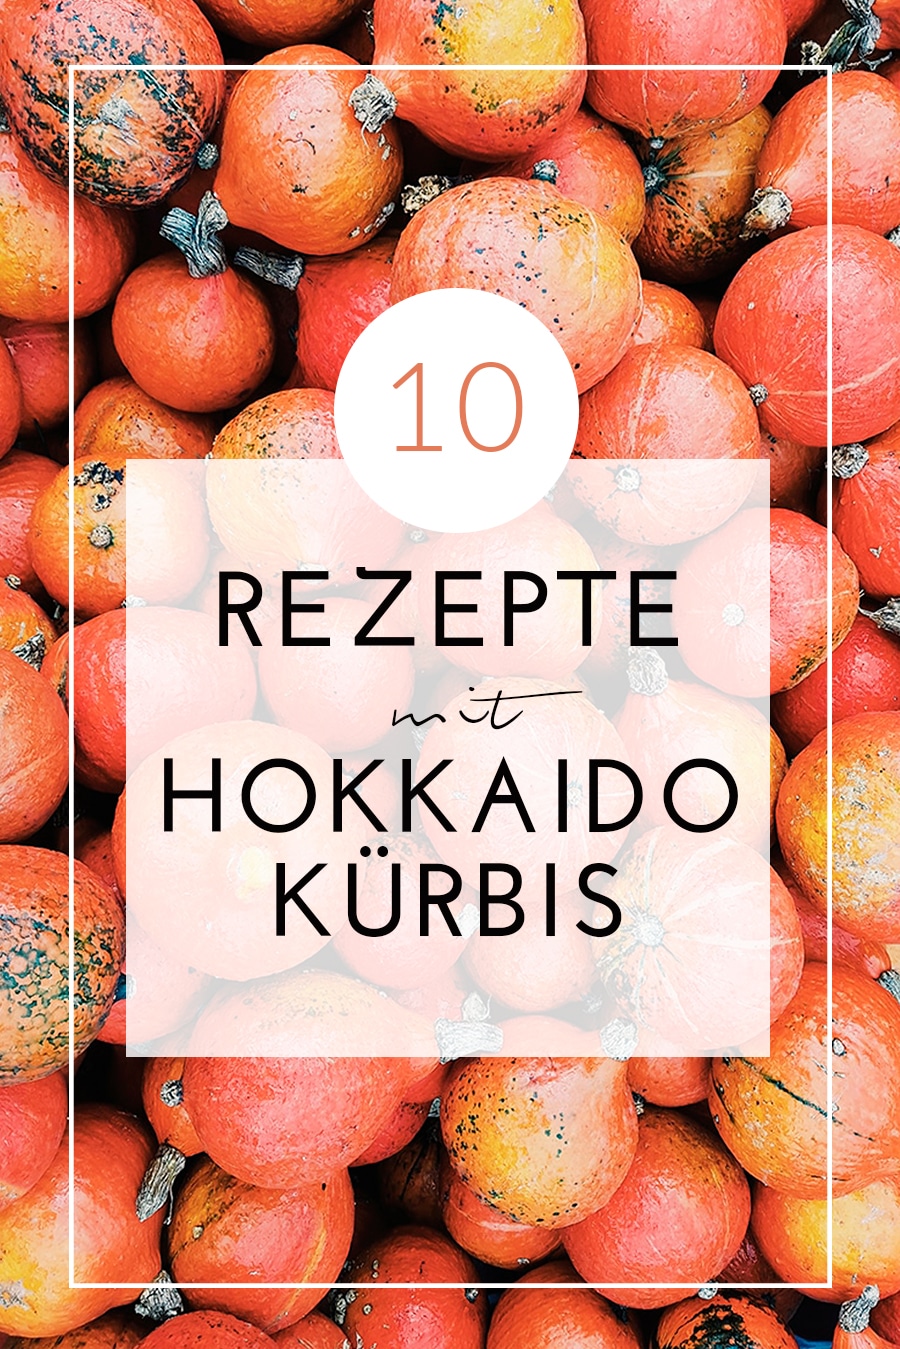 10 Kreative Rezepte Mit Hokkaido Kurbis Feines Gemuse